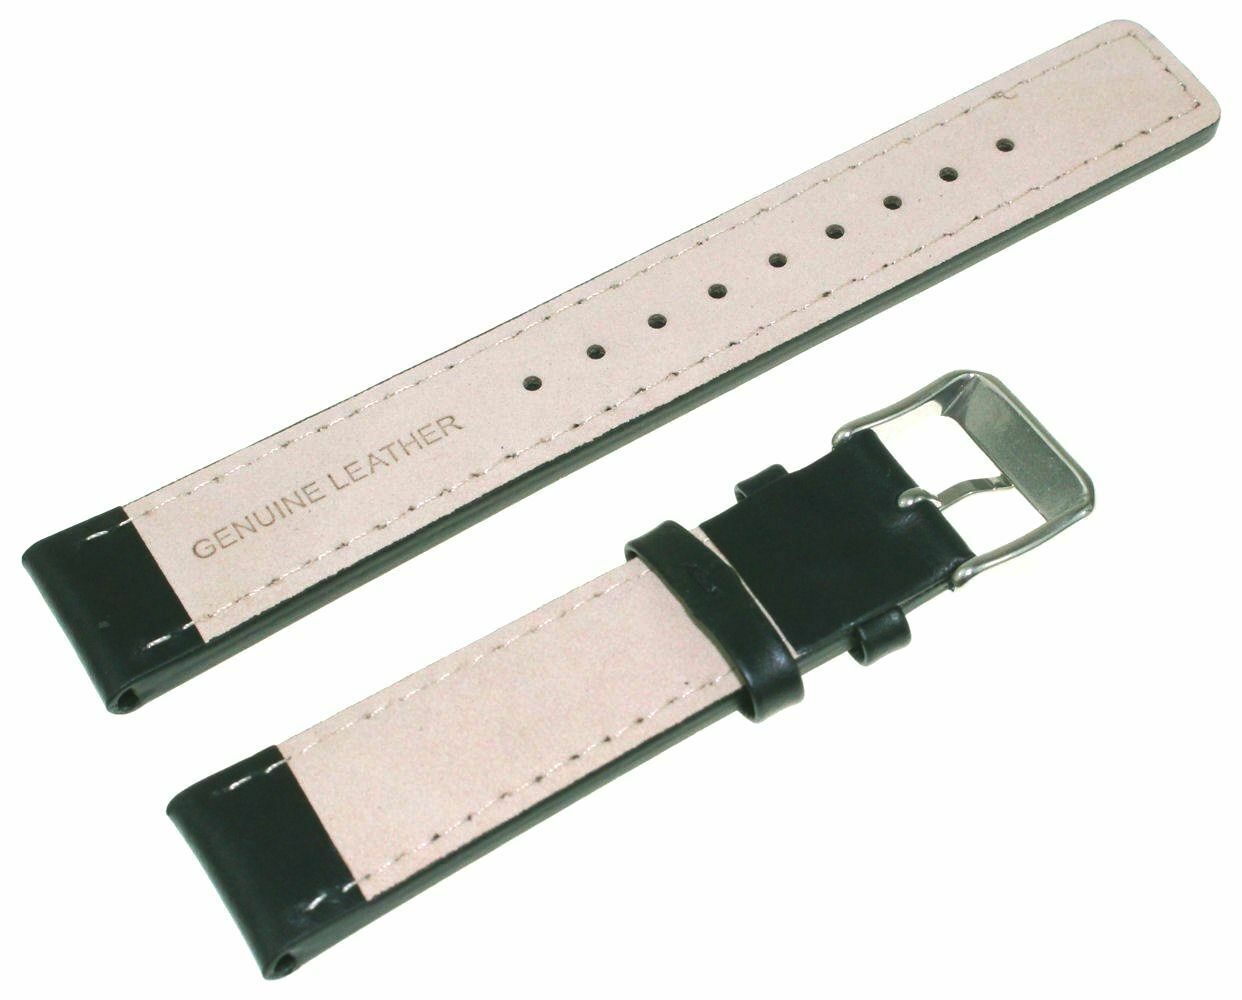 Timex Ersatzarmband T2E561 Bank Street Men - Ersatzband 20mm universal